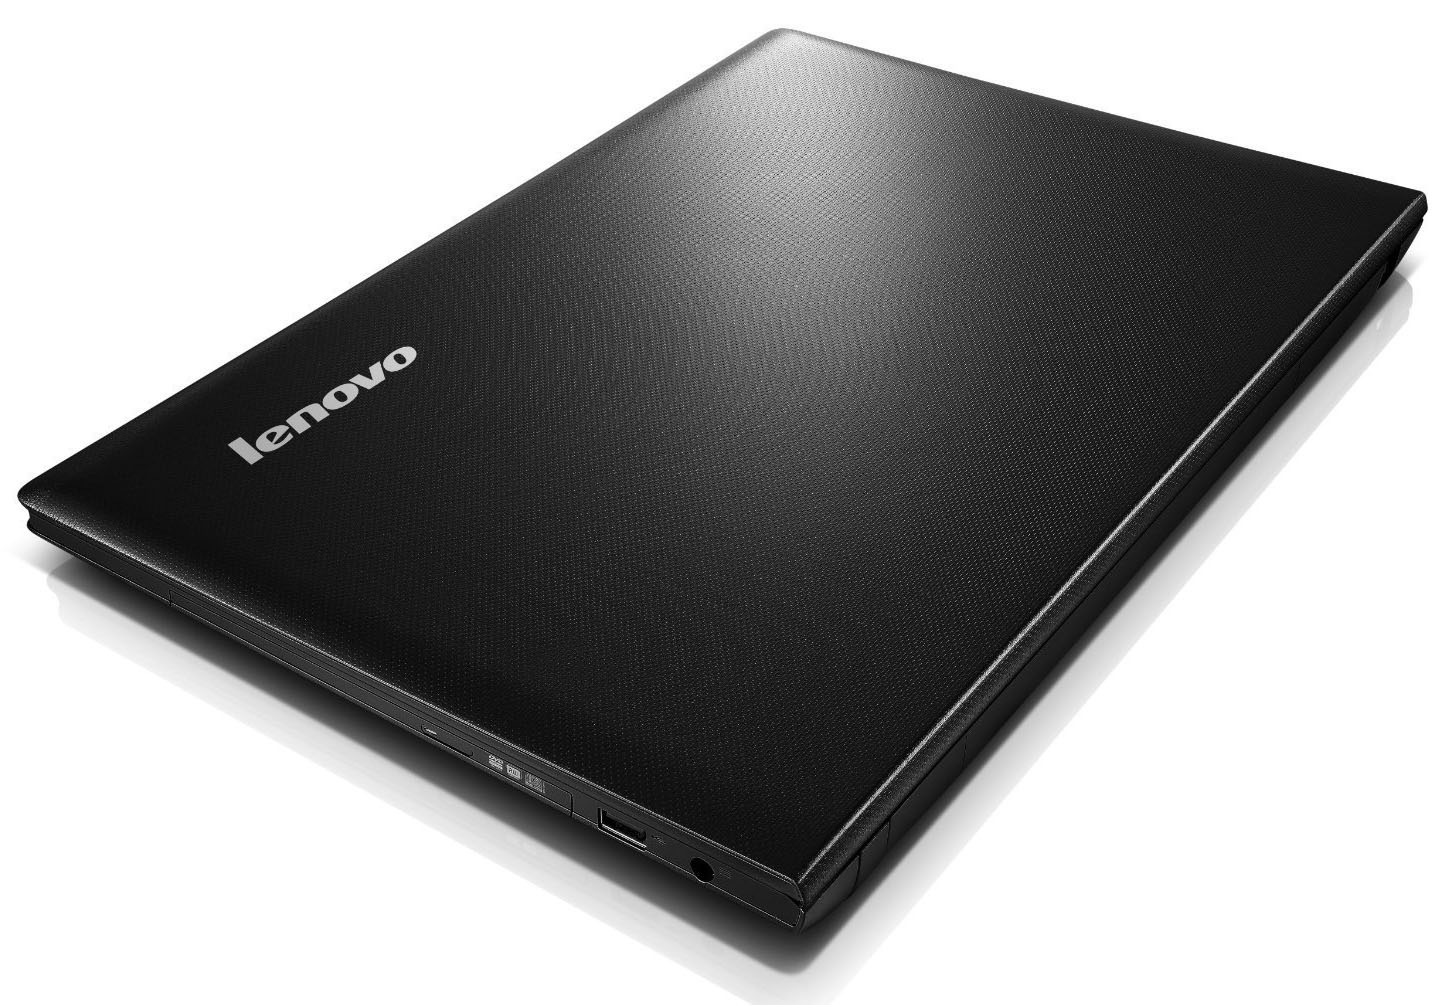 Lenovo G500 - Celeron 1005M · Intel HD Graphics (Ivy Bridge